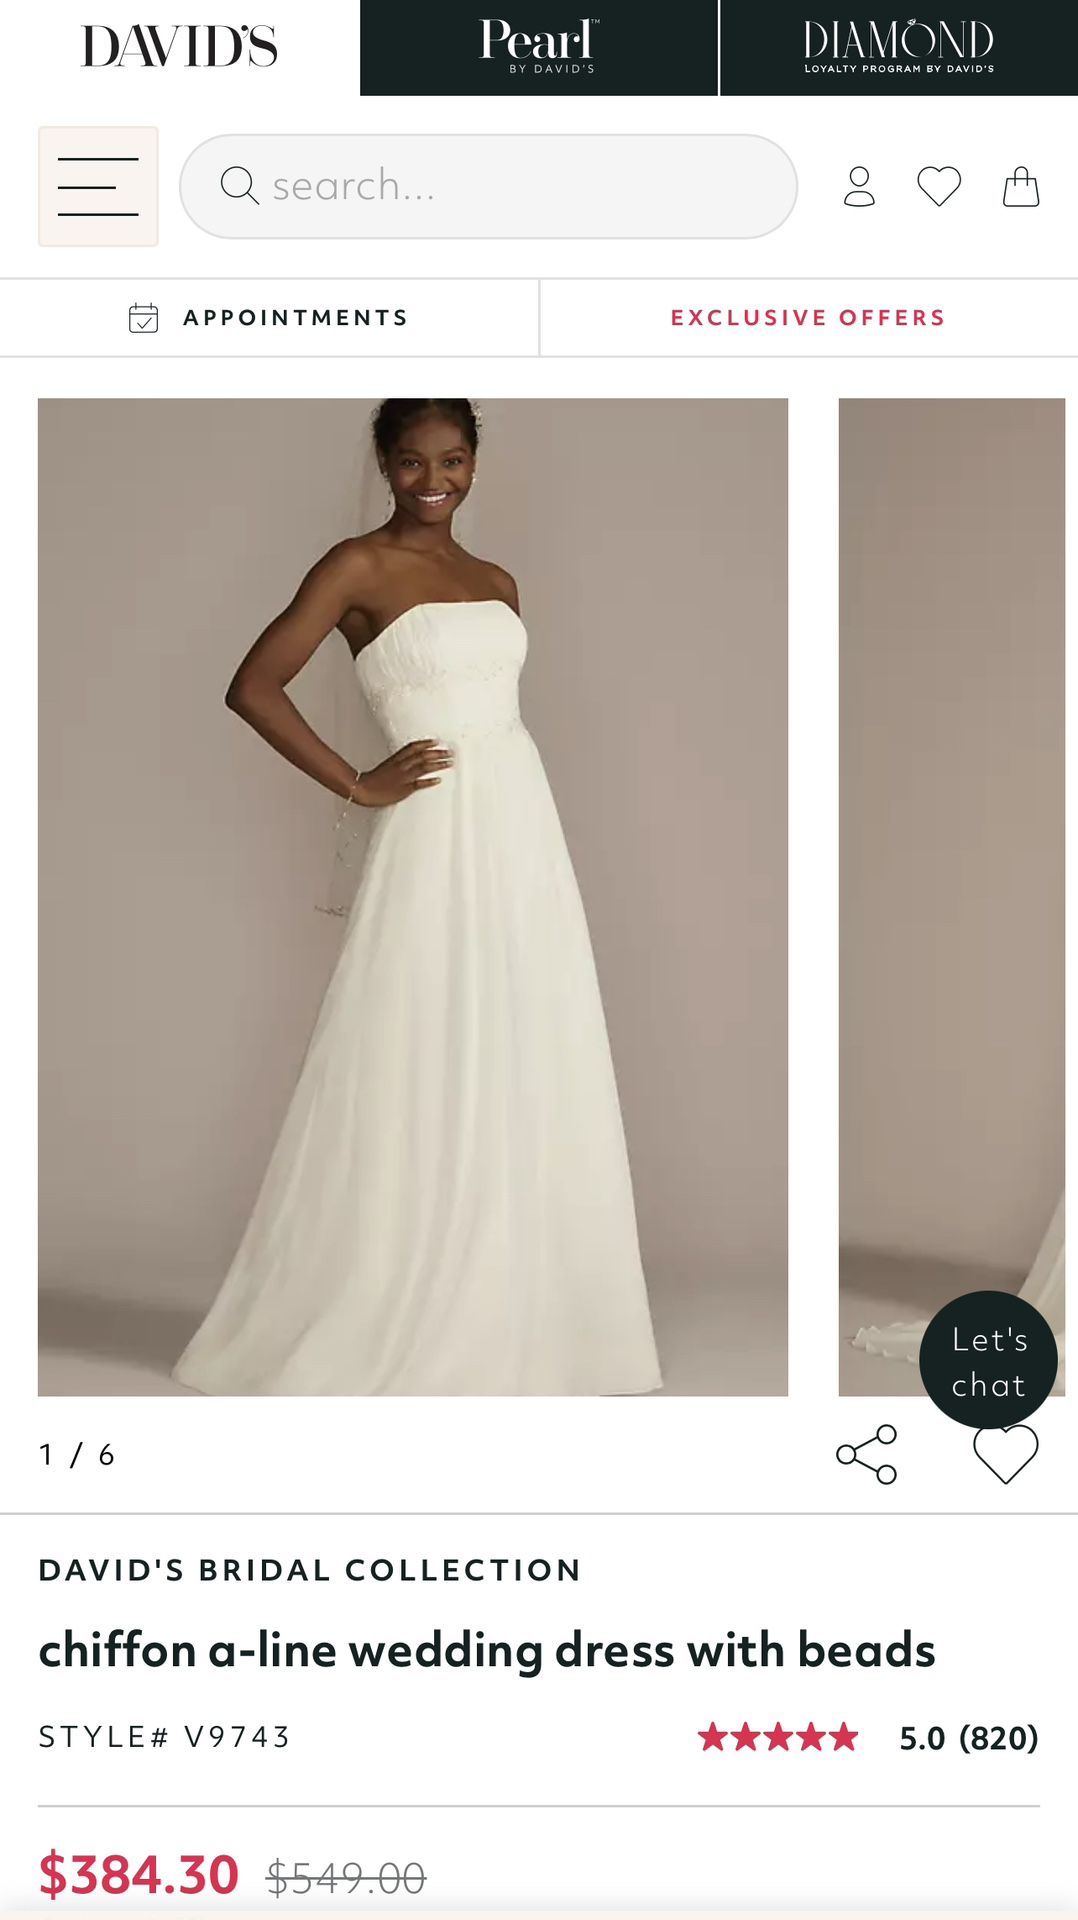 Strapless A-line Ivory Wedding Dress Size 10